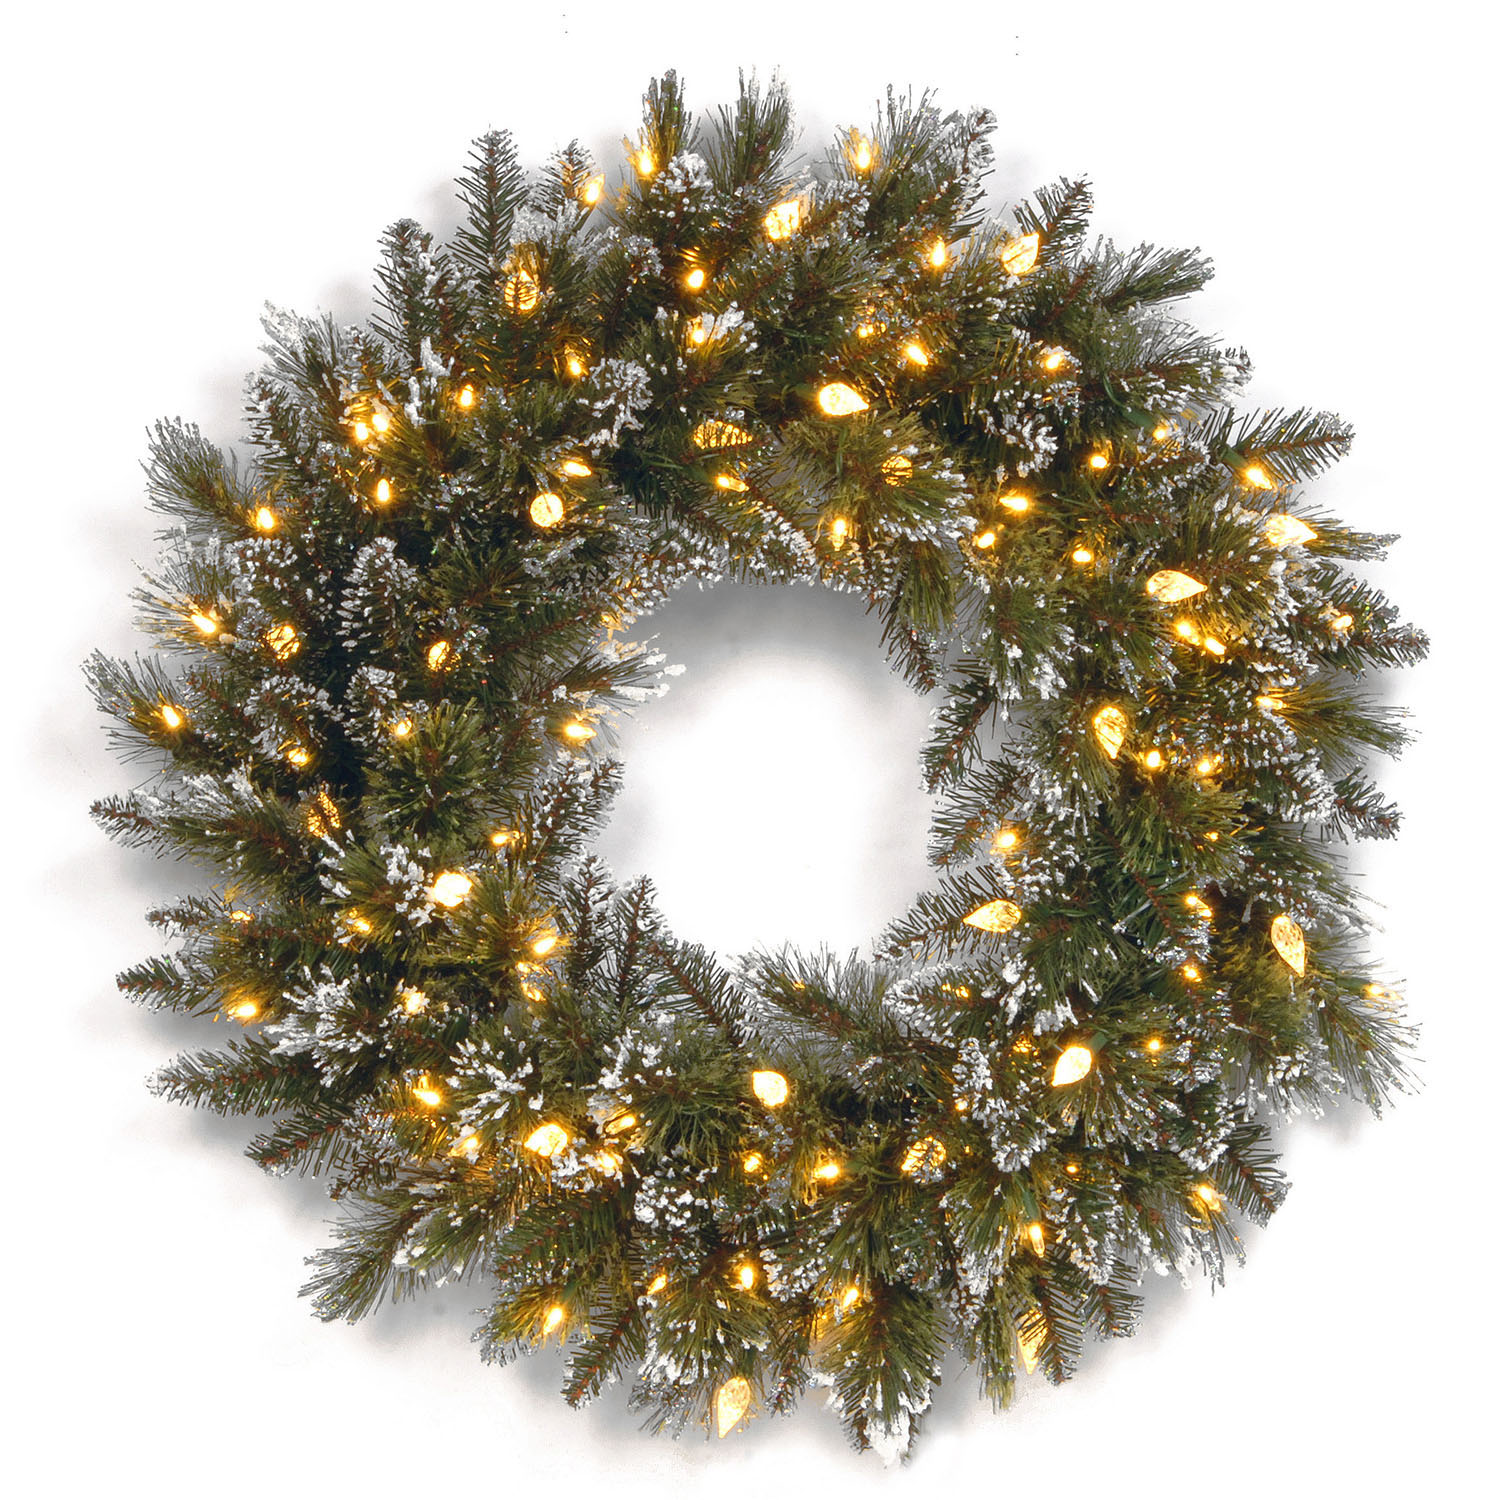 24 Inch Glittery Bristle Pine Wreath: Clear Led Lights